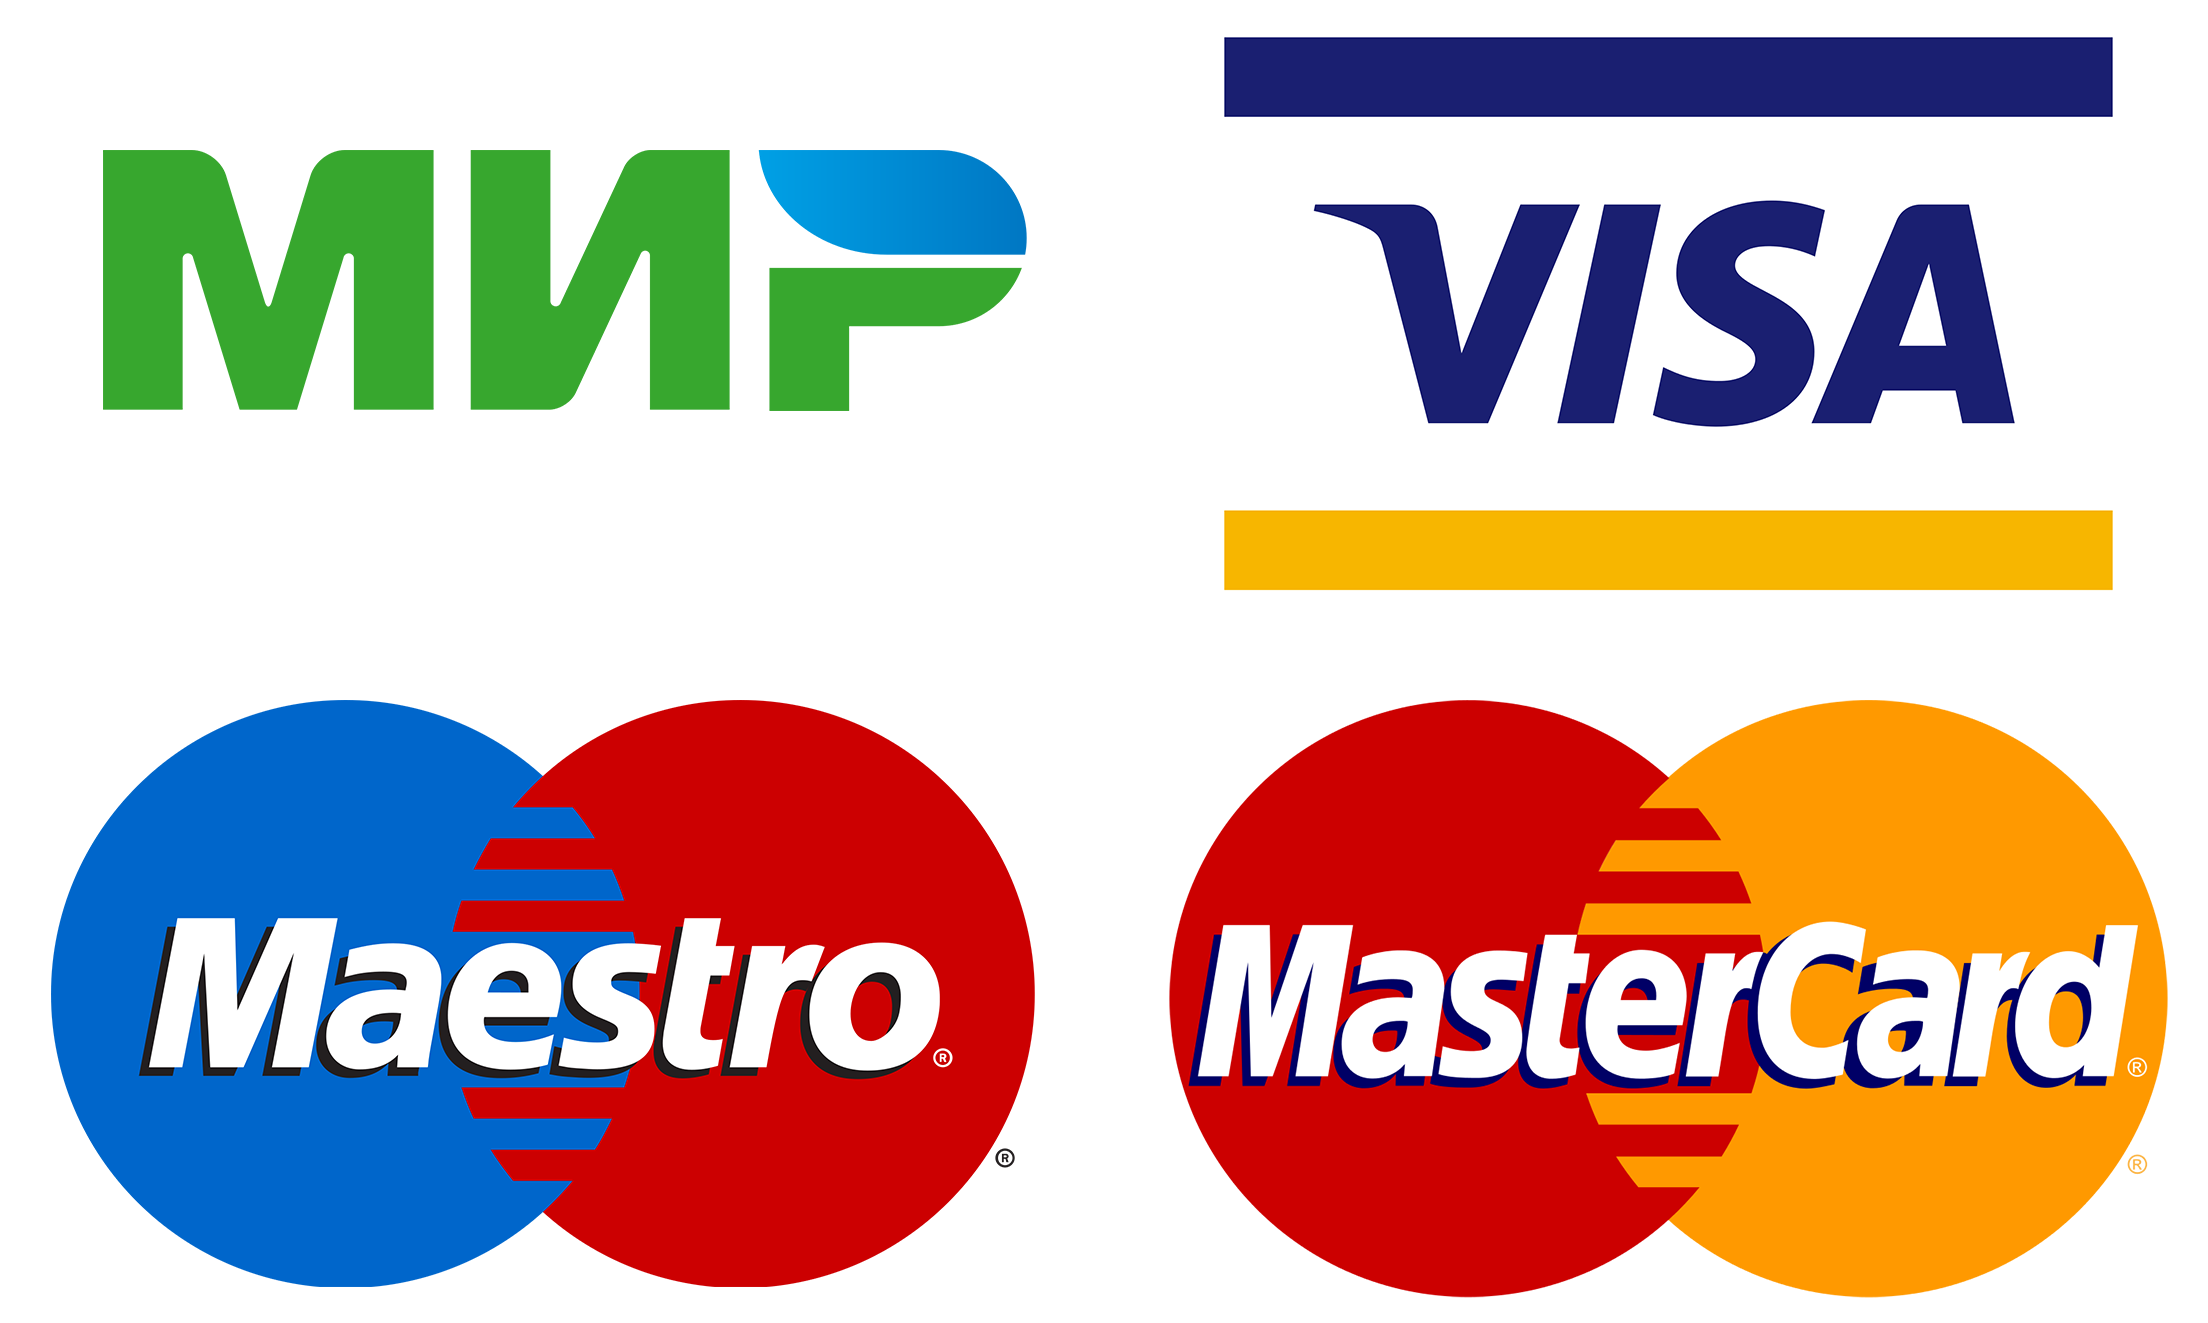 Оплата на сайте банка. Виза Мастеркард маэстро. Значок оплаты банковскими картами. Логотипы платежных систем. Логотипы банковских карт.